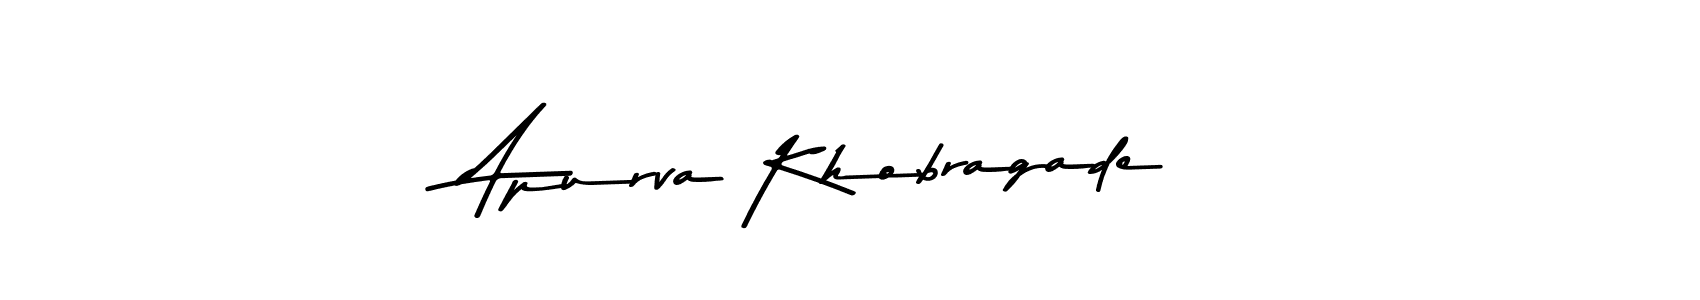 How to Draw Apurva Khobragade signature style? Asem Kandis PERSONAL USE is a latest design signature styles for name Apurva Khobragade. Apurva Khobragade signature style 9 images and pictures png